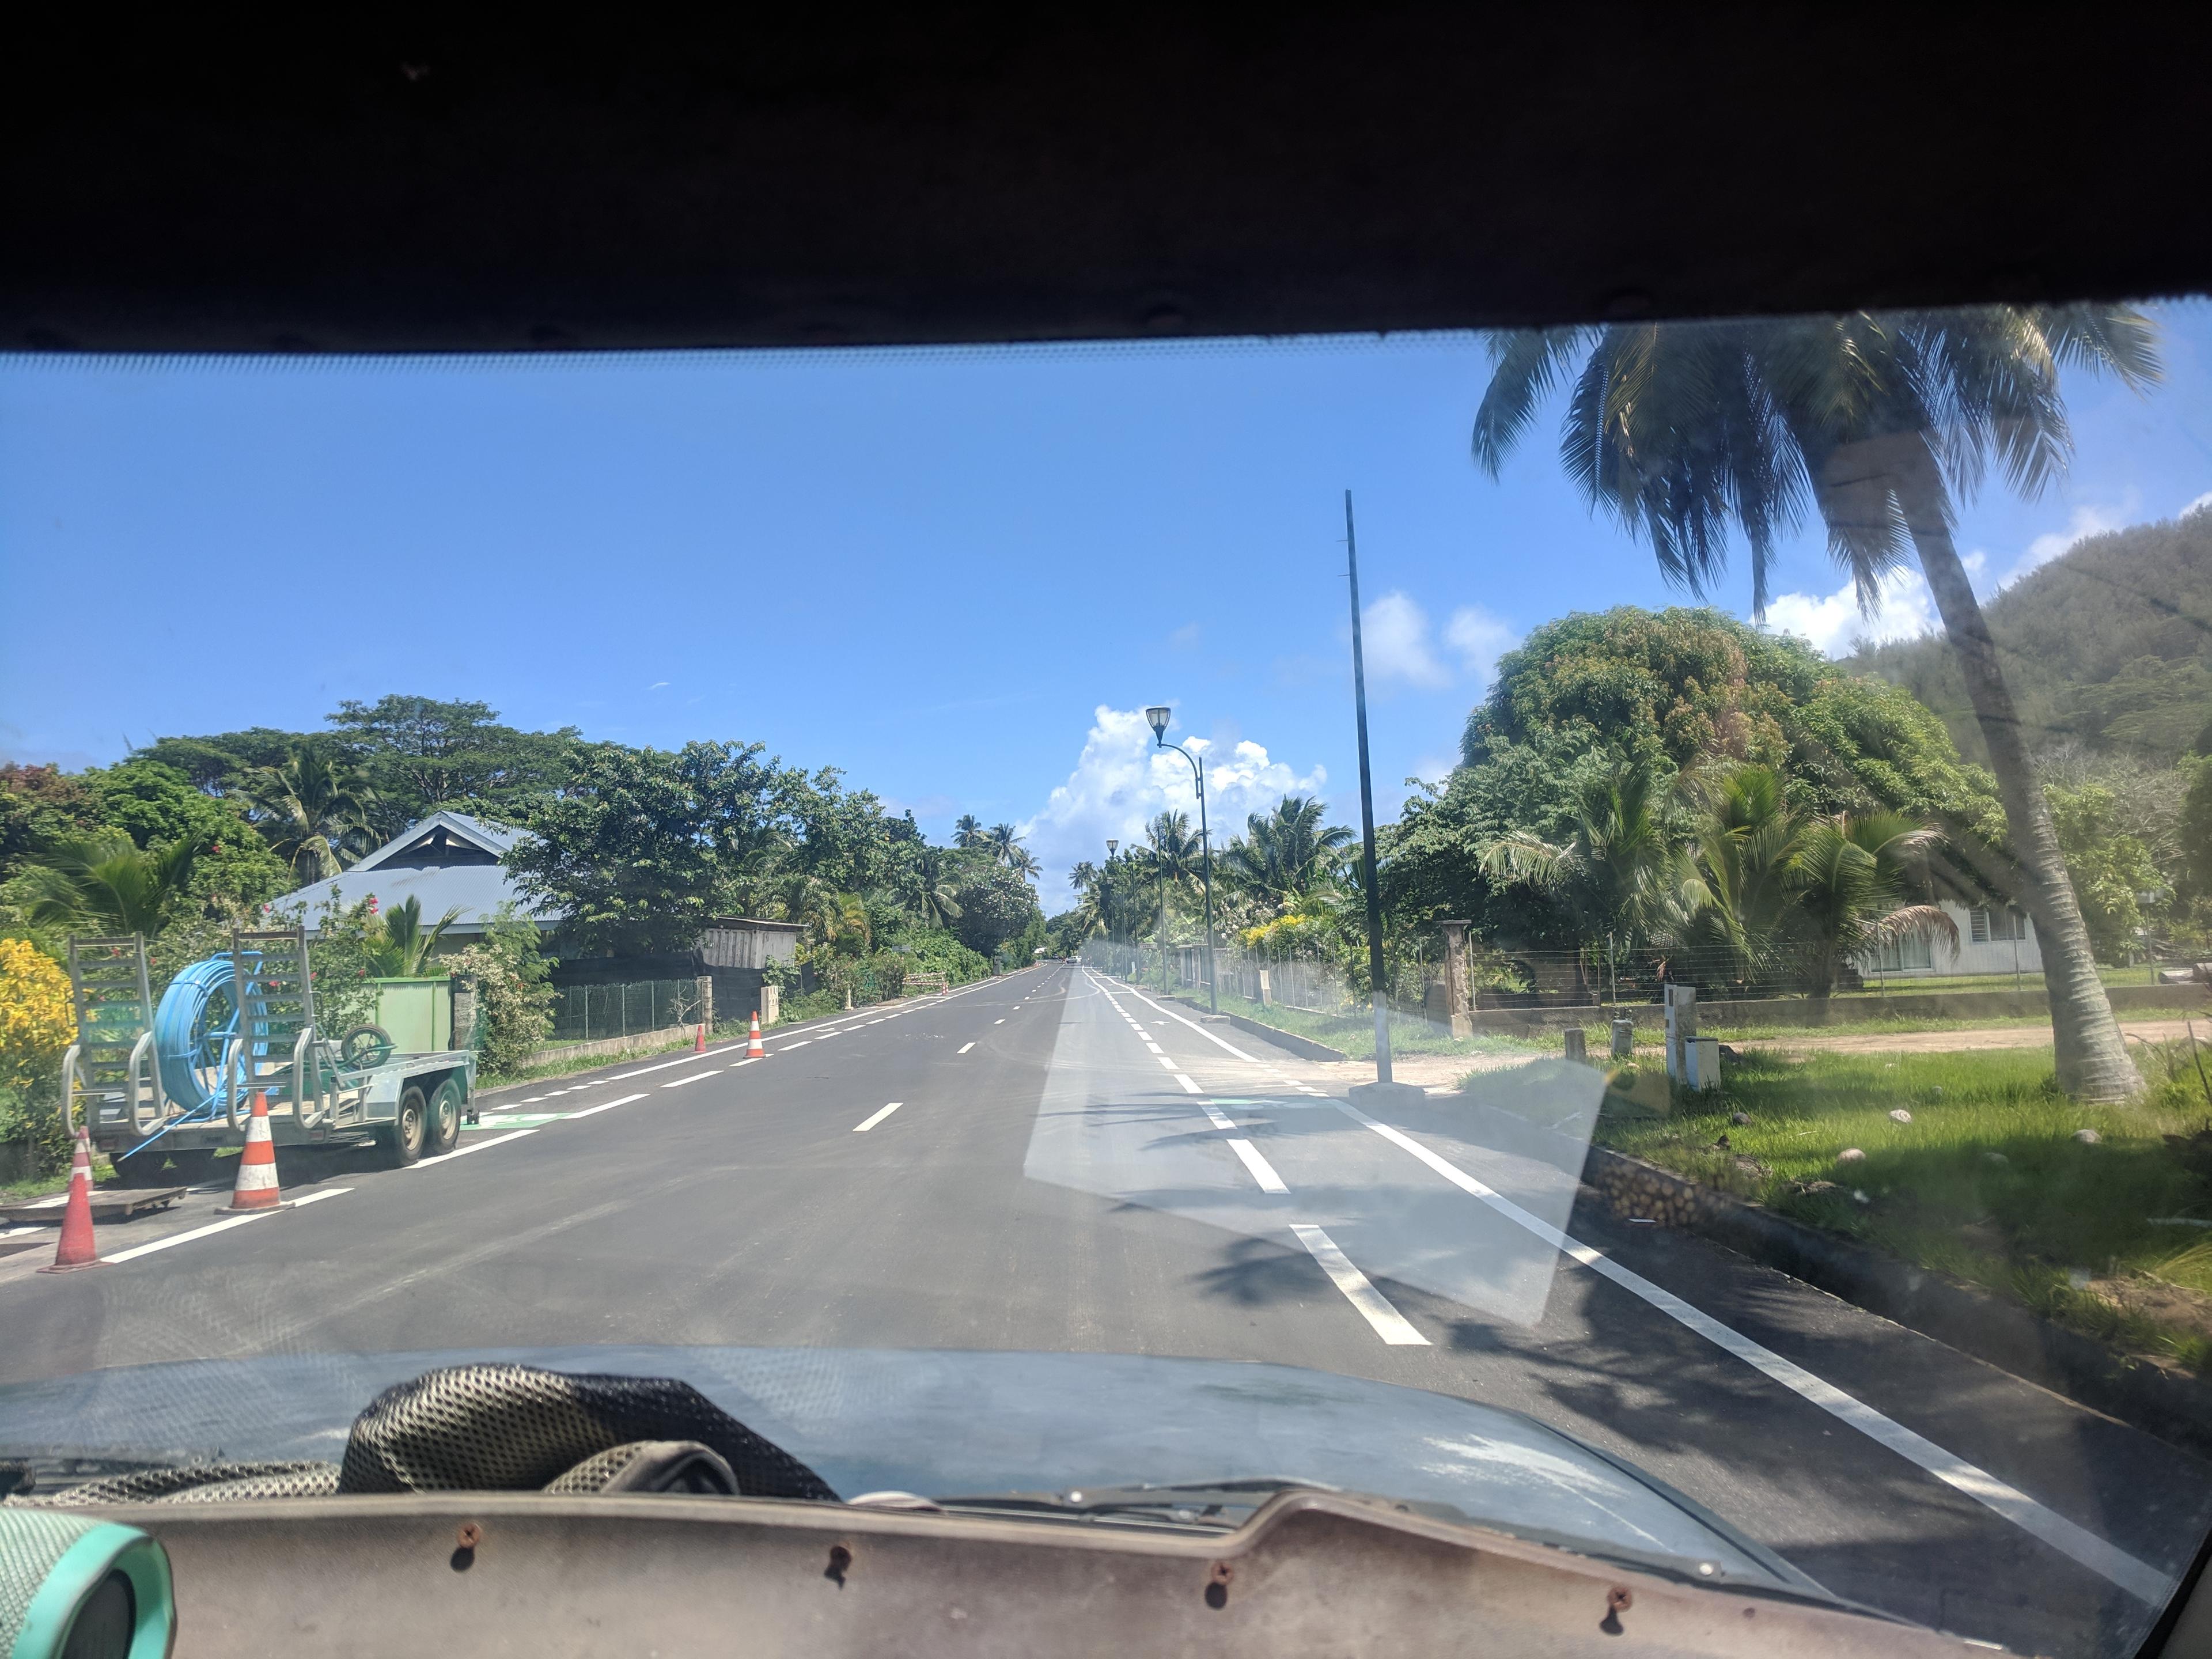 Driving around the Mo'orea